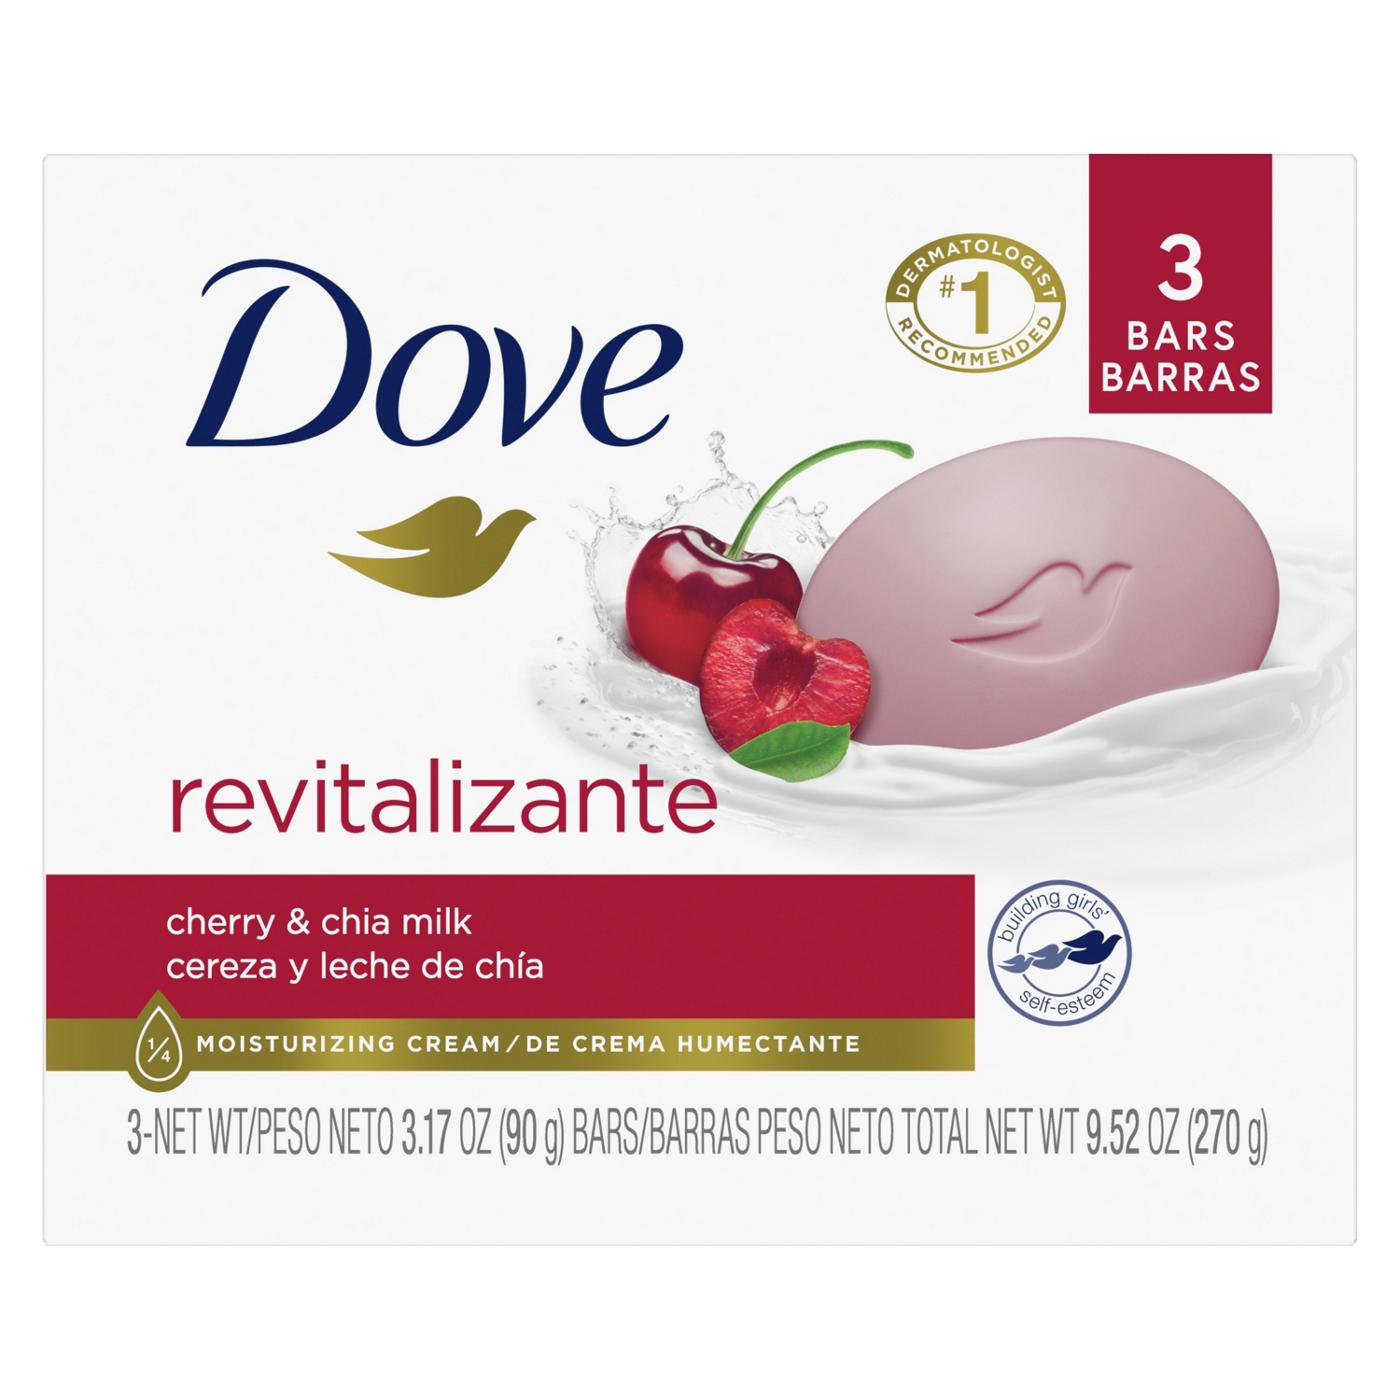 Dove Revitalize Cherry & Chia Milk Bar Soap; image 1 of 2